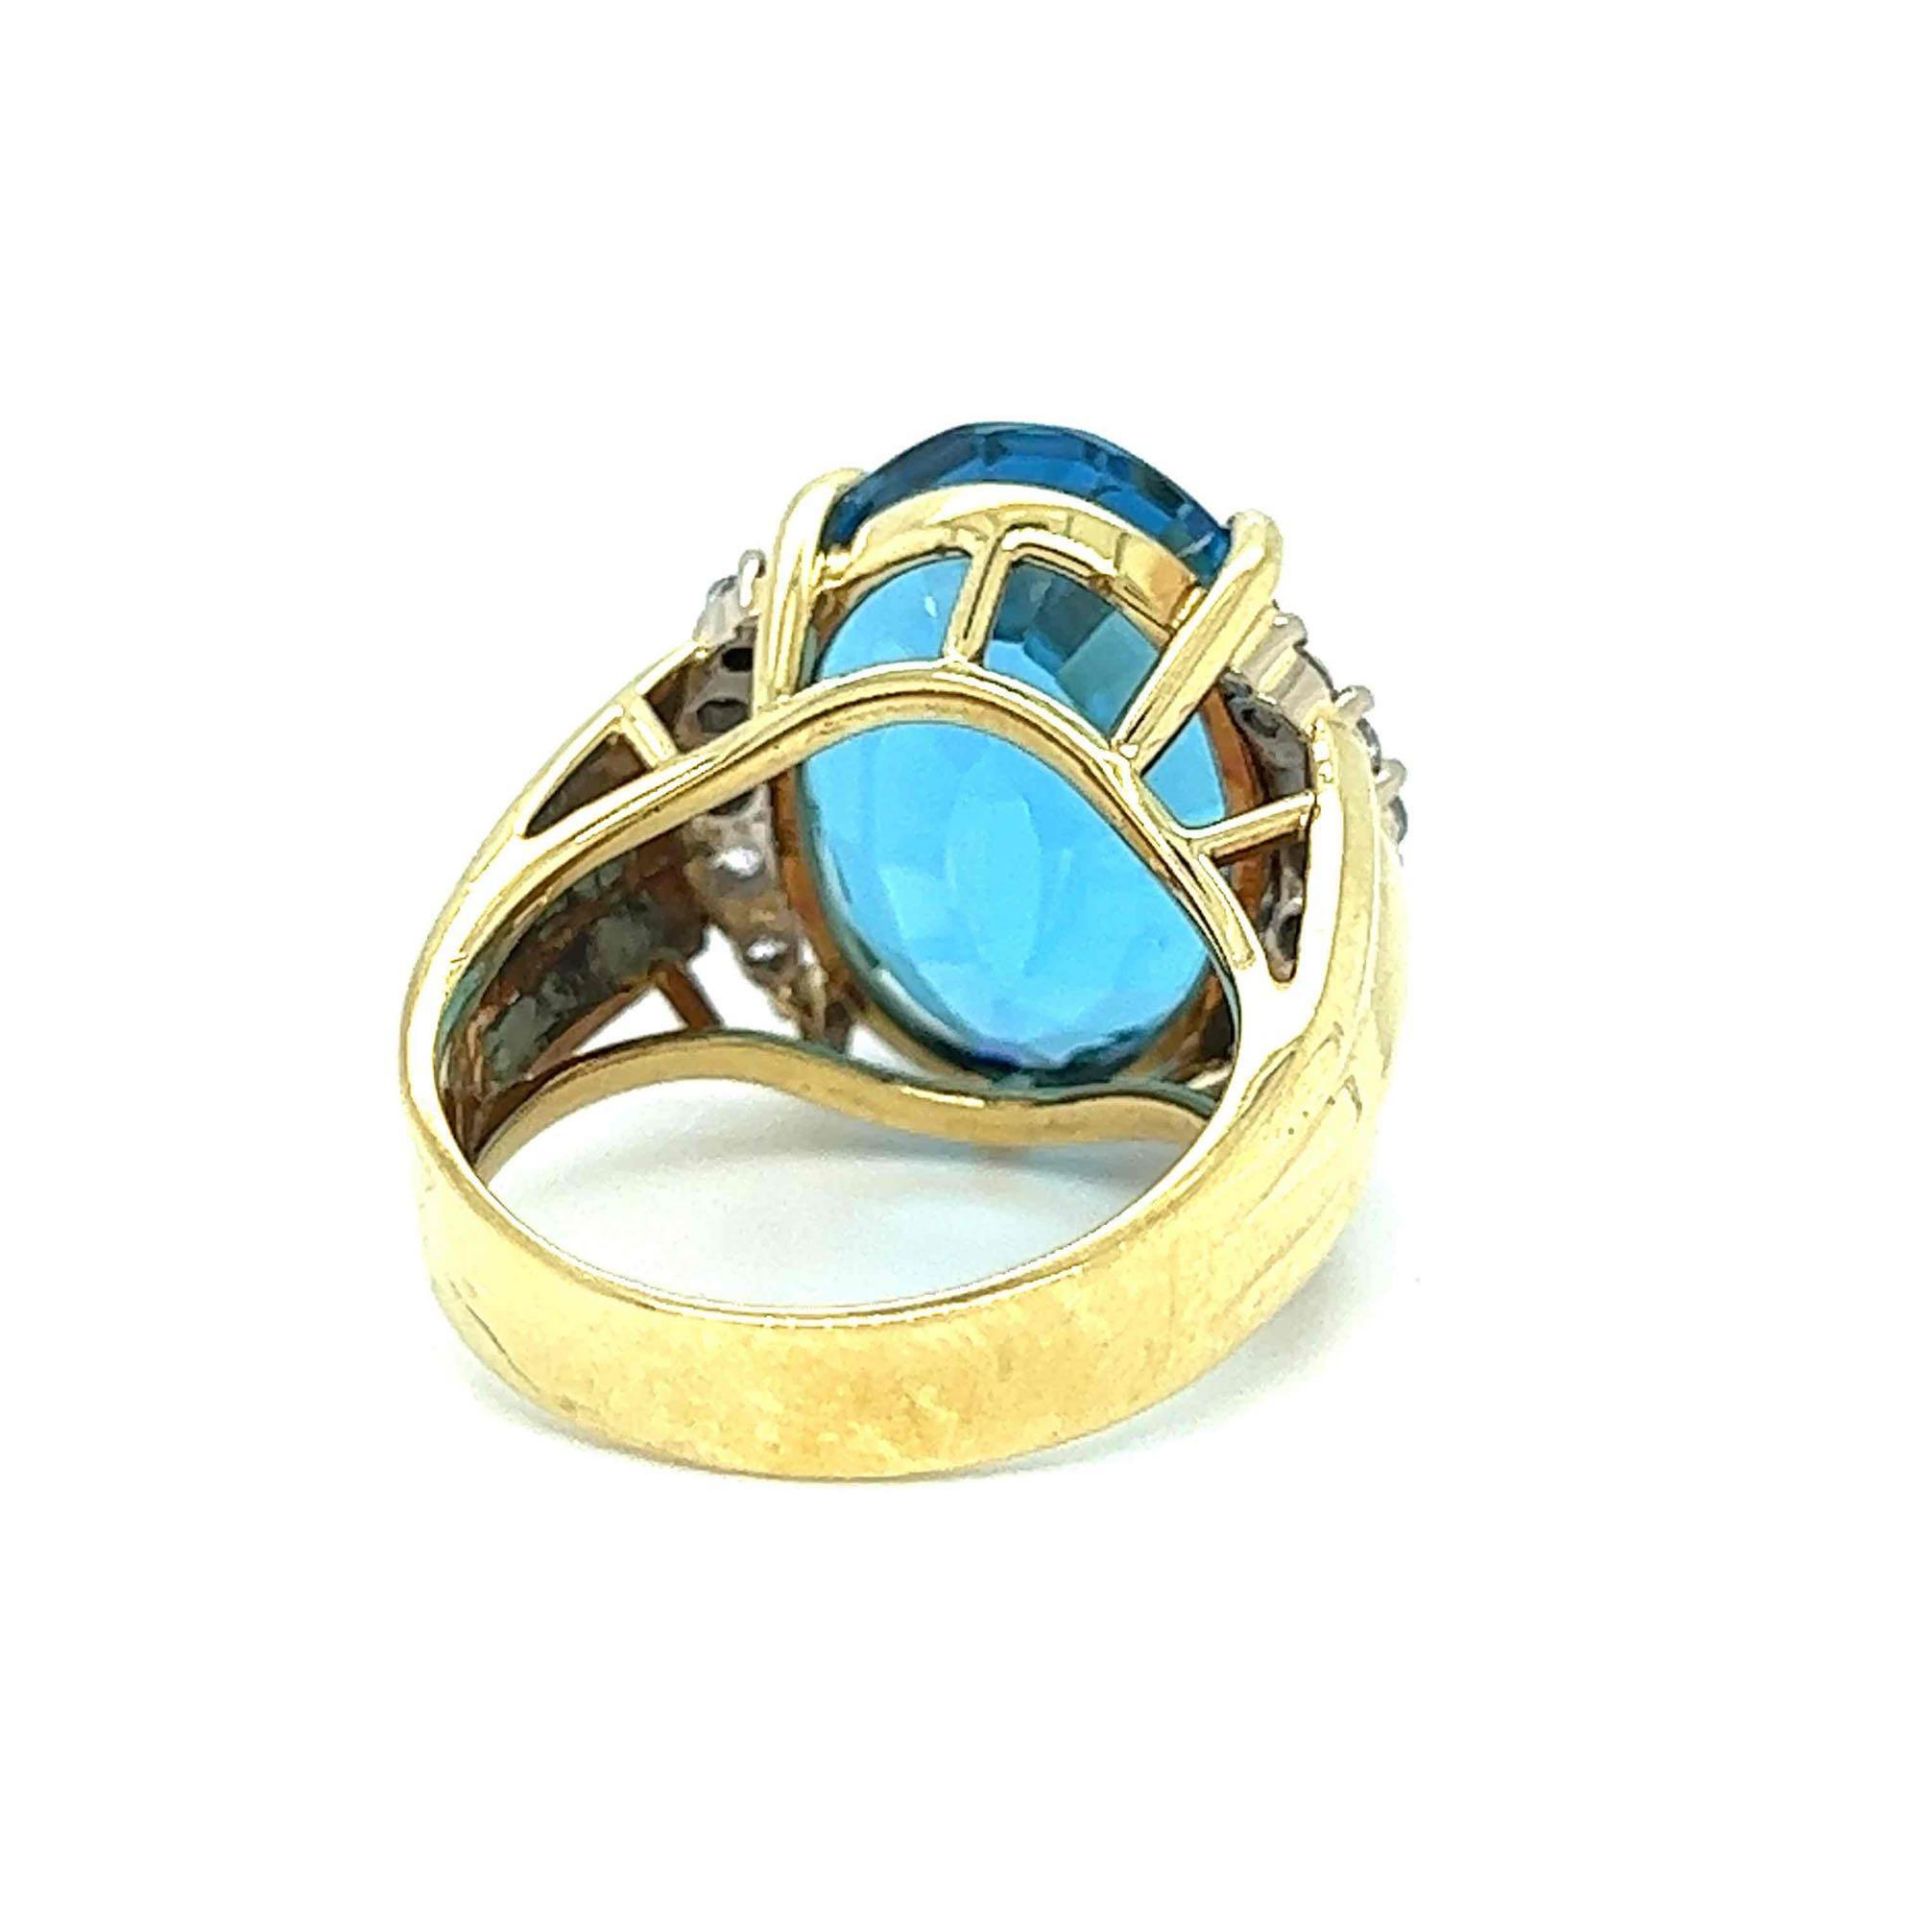 ESTATE BLUE TOPAZ AND DIAMOND RING 18K GOLD - Image 3 of 3